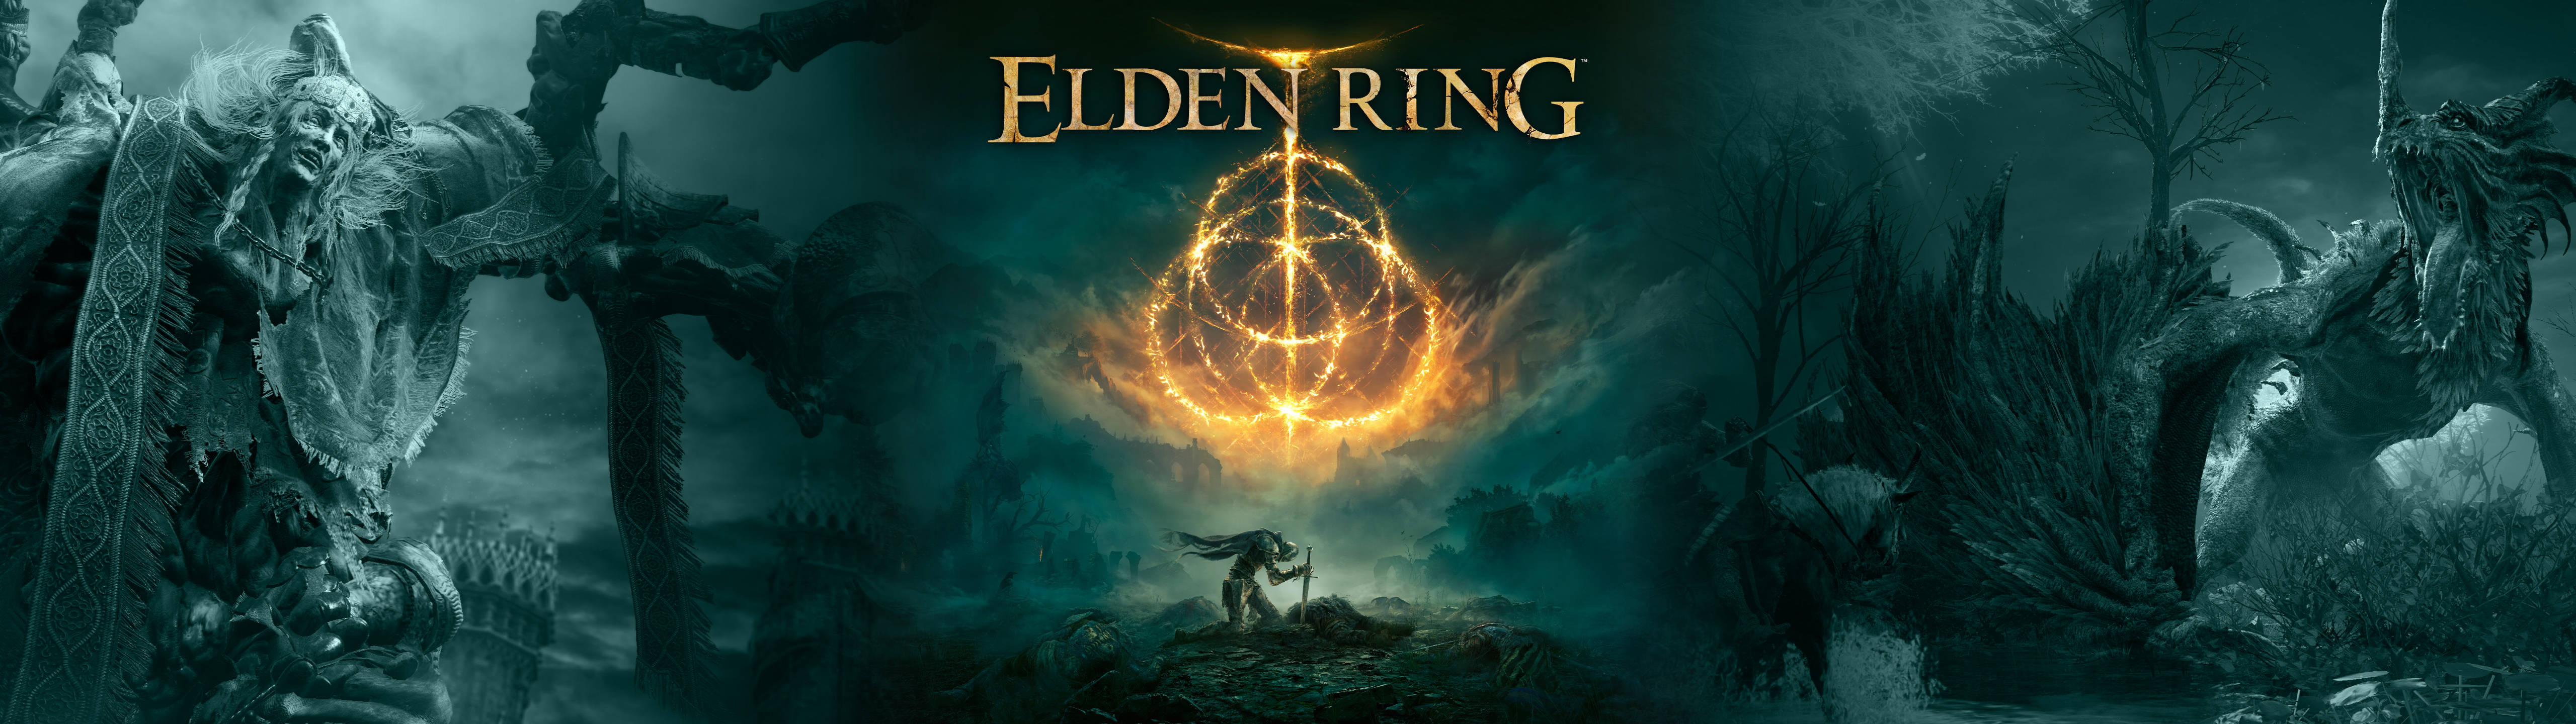 Elden Ring 5120x1440 Gaming Wallpaper